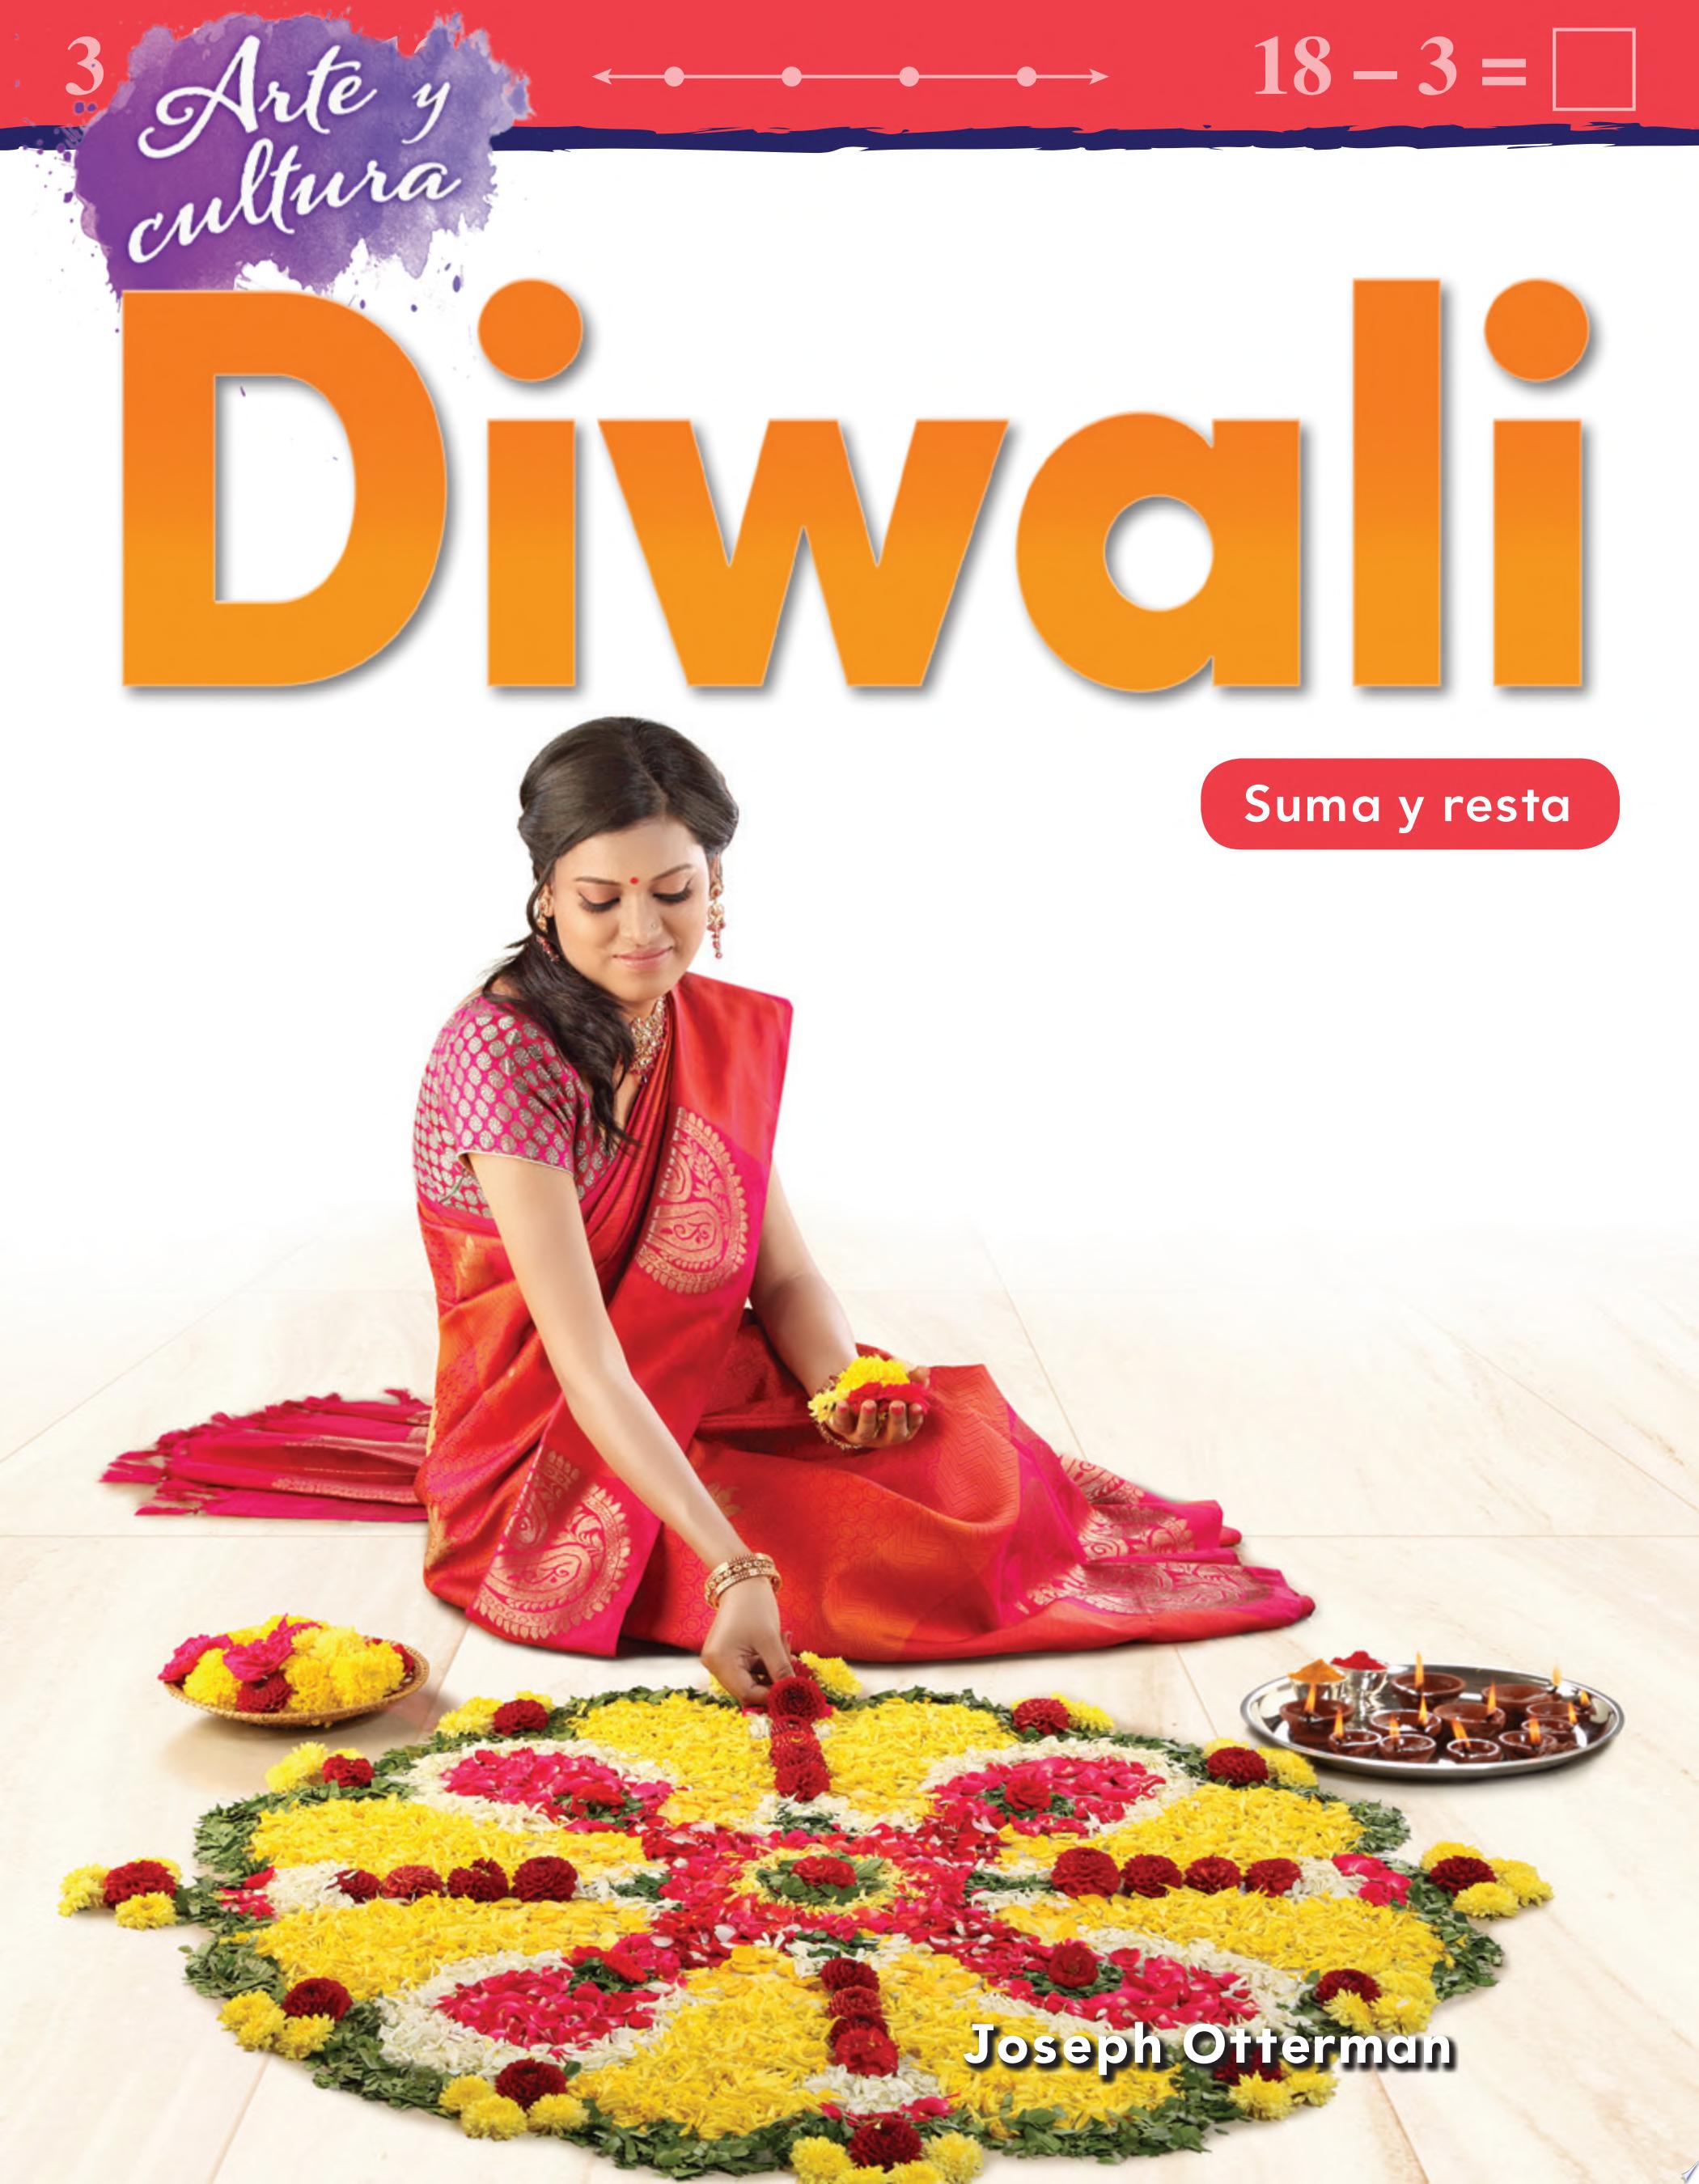 Image for "Arte y cultura: Diwali: Suma y resta (Art and Culture: Diwali: Addition and Subtraction)"